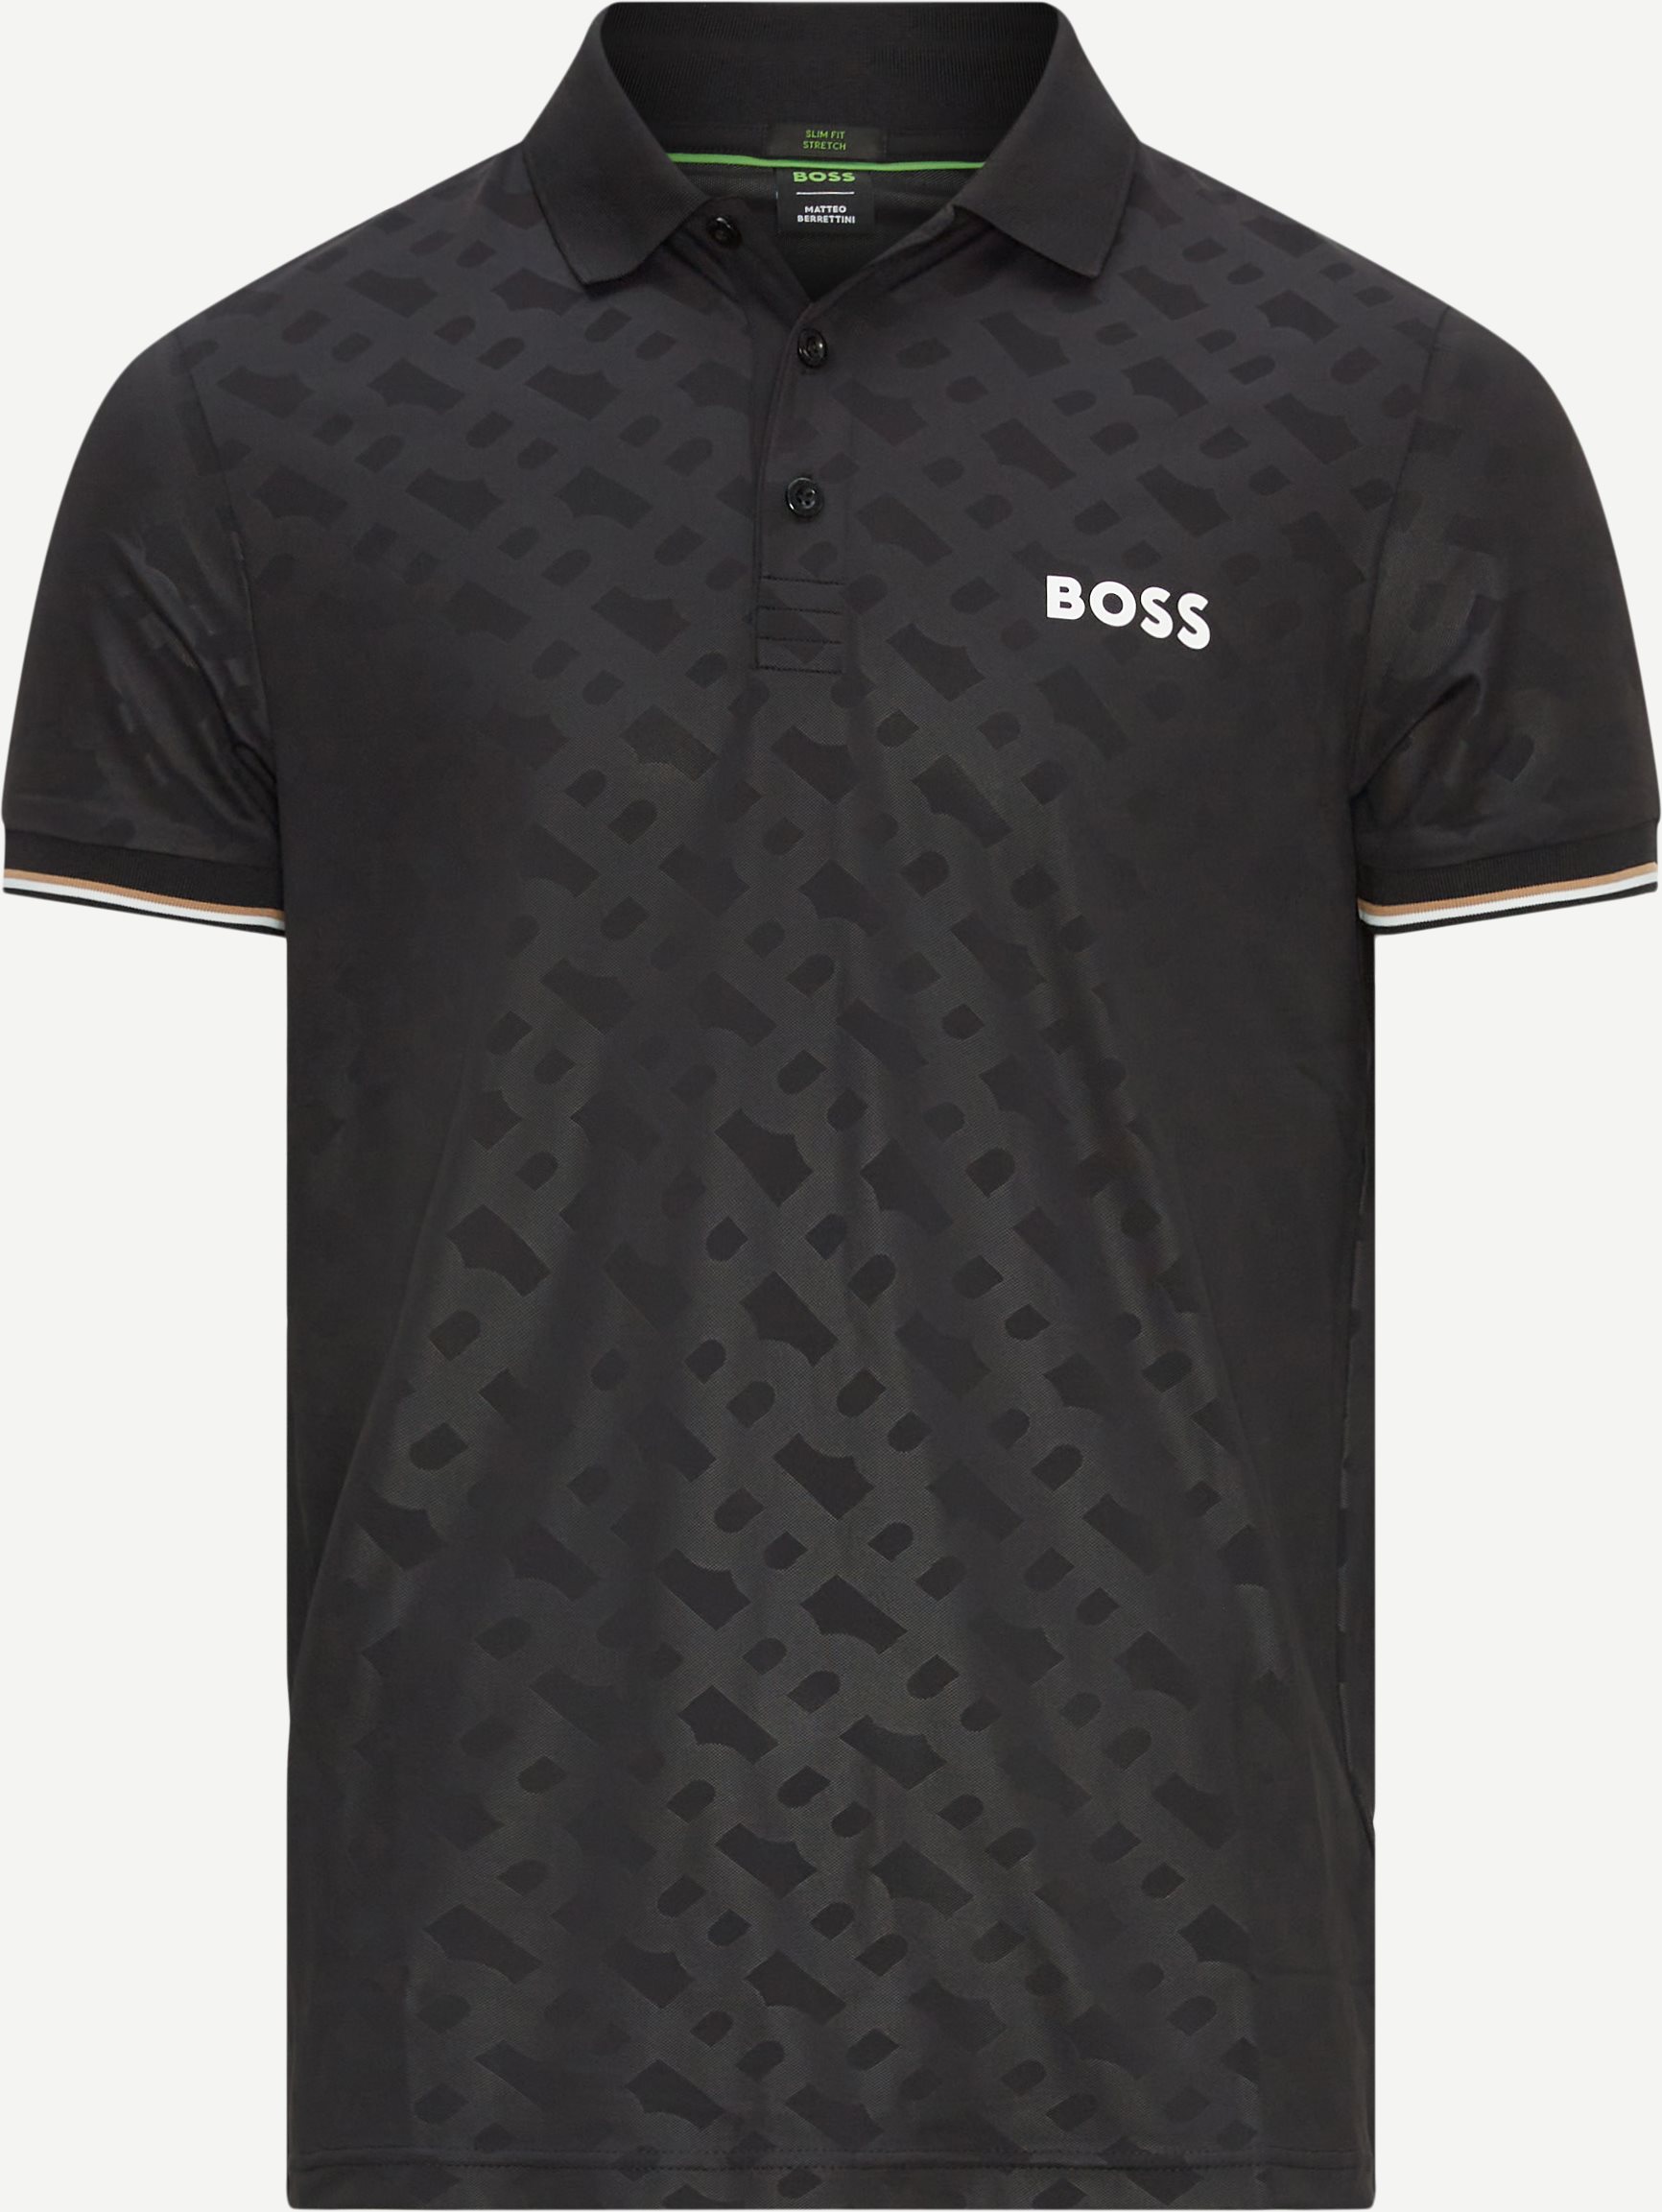 BOSS Athleisure T-shirts 50501282 PATTEO MB 12 Black